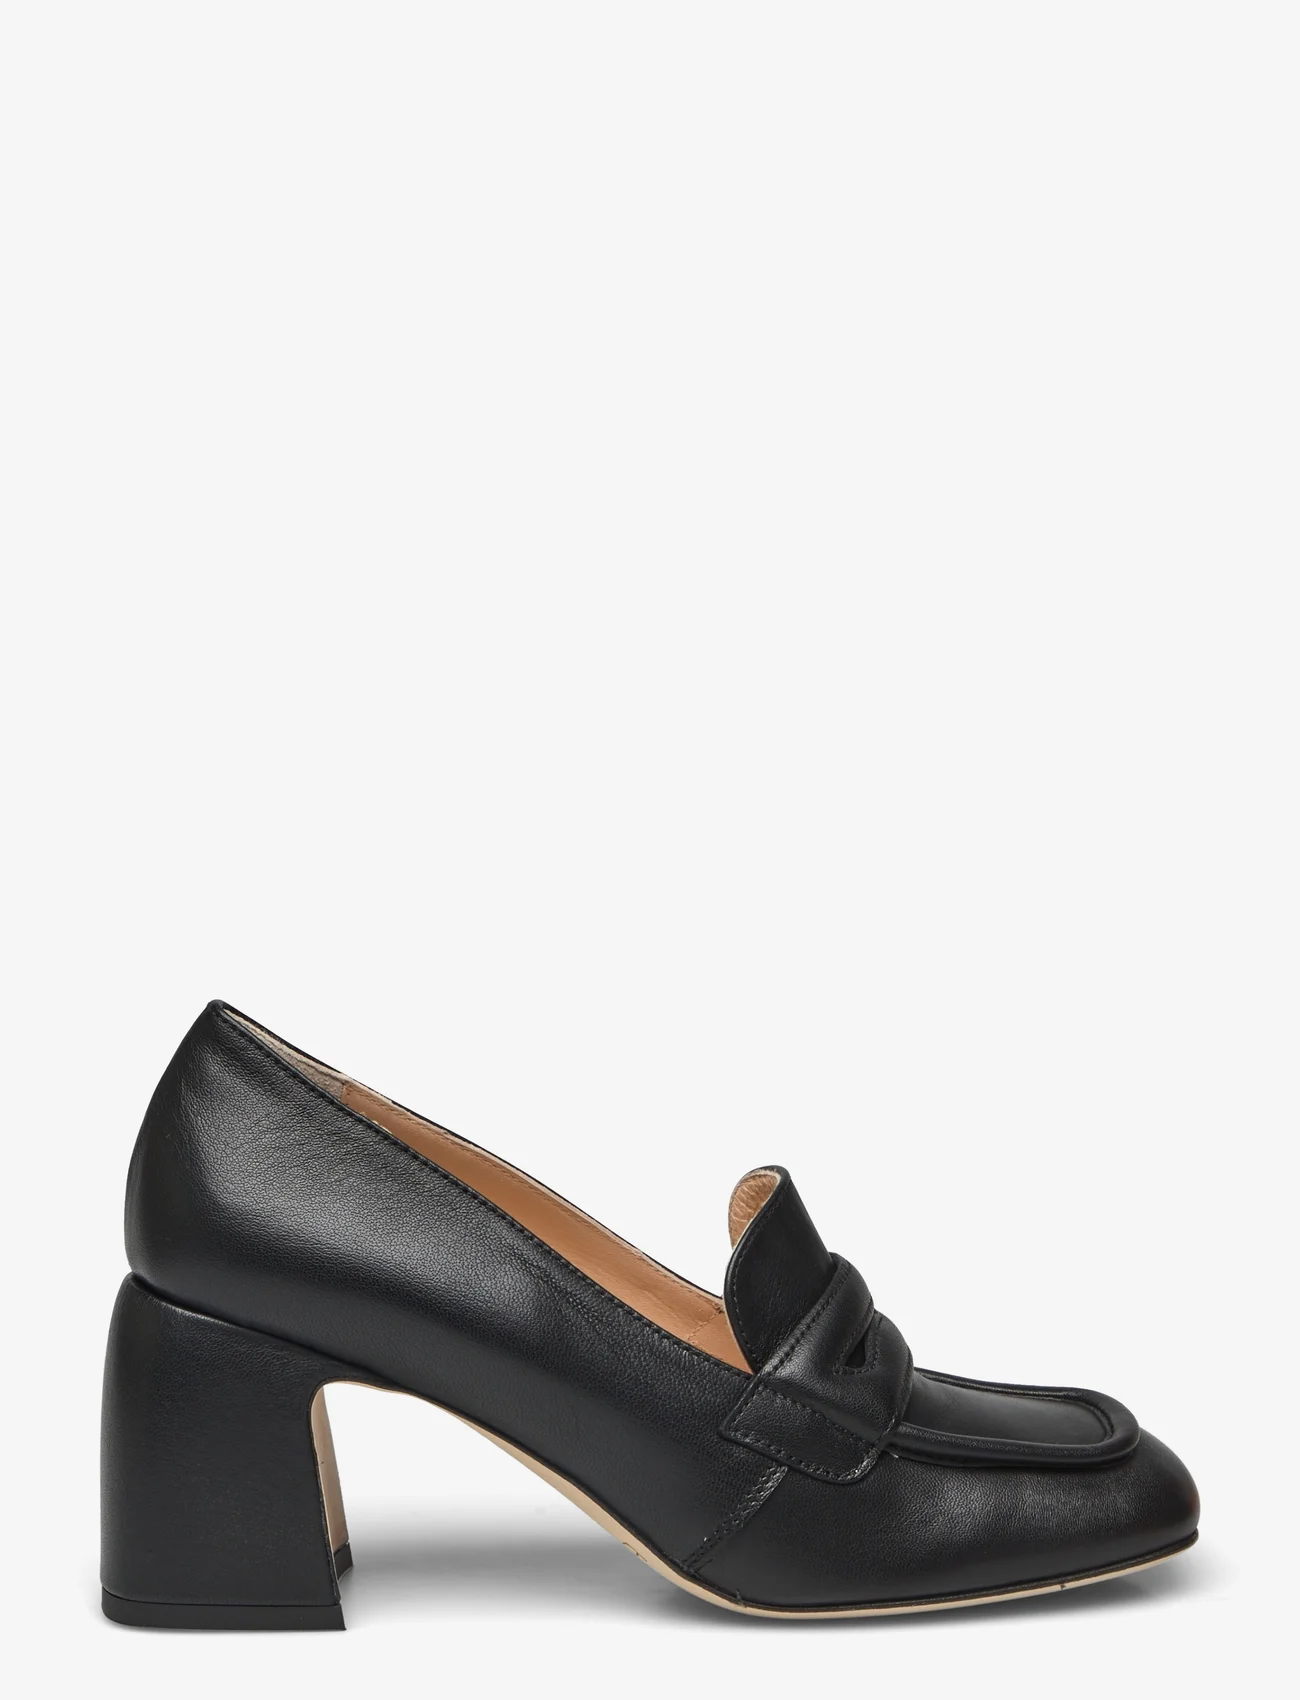 Laura Bellariva - shoes - loafer mit absatz - black - 1